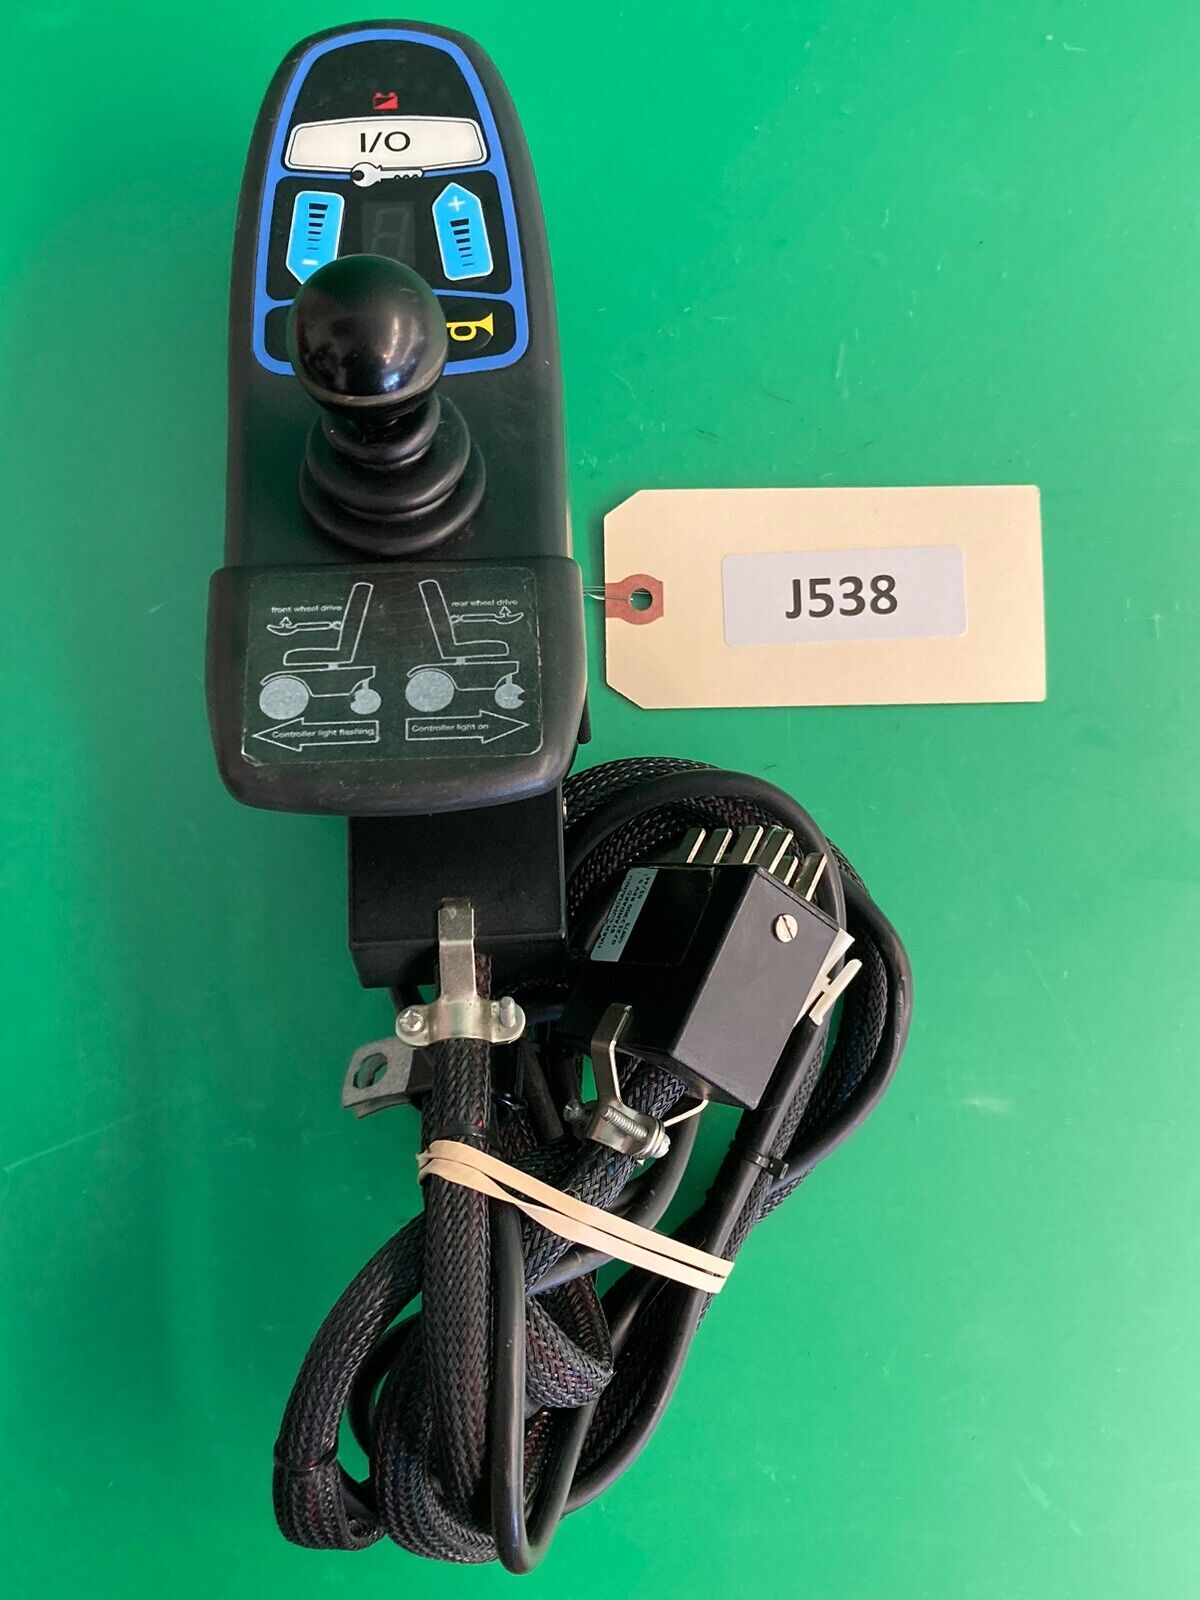 Dynamic Joystick Controller for Rascal Mobility Power Wheelchair DC50SN01 #J538